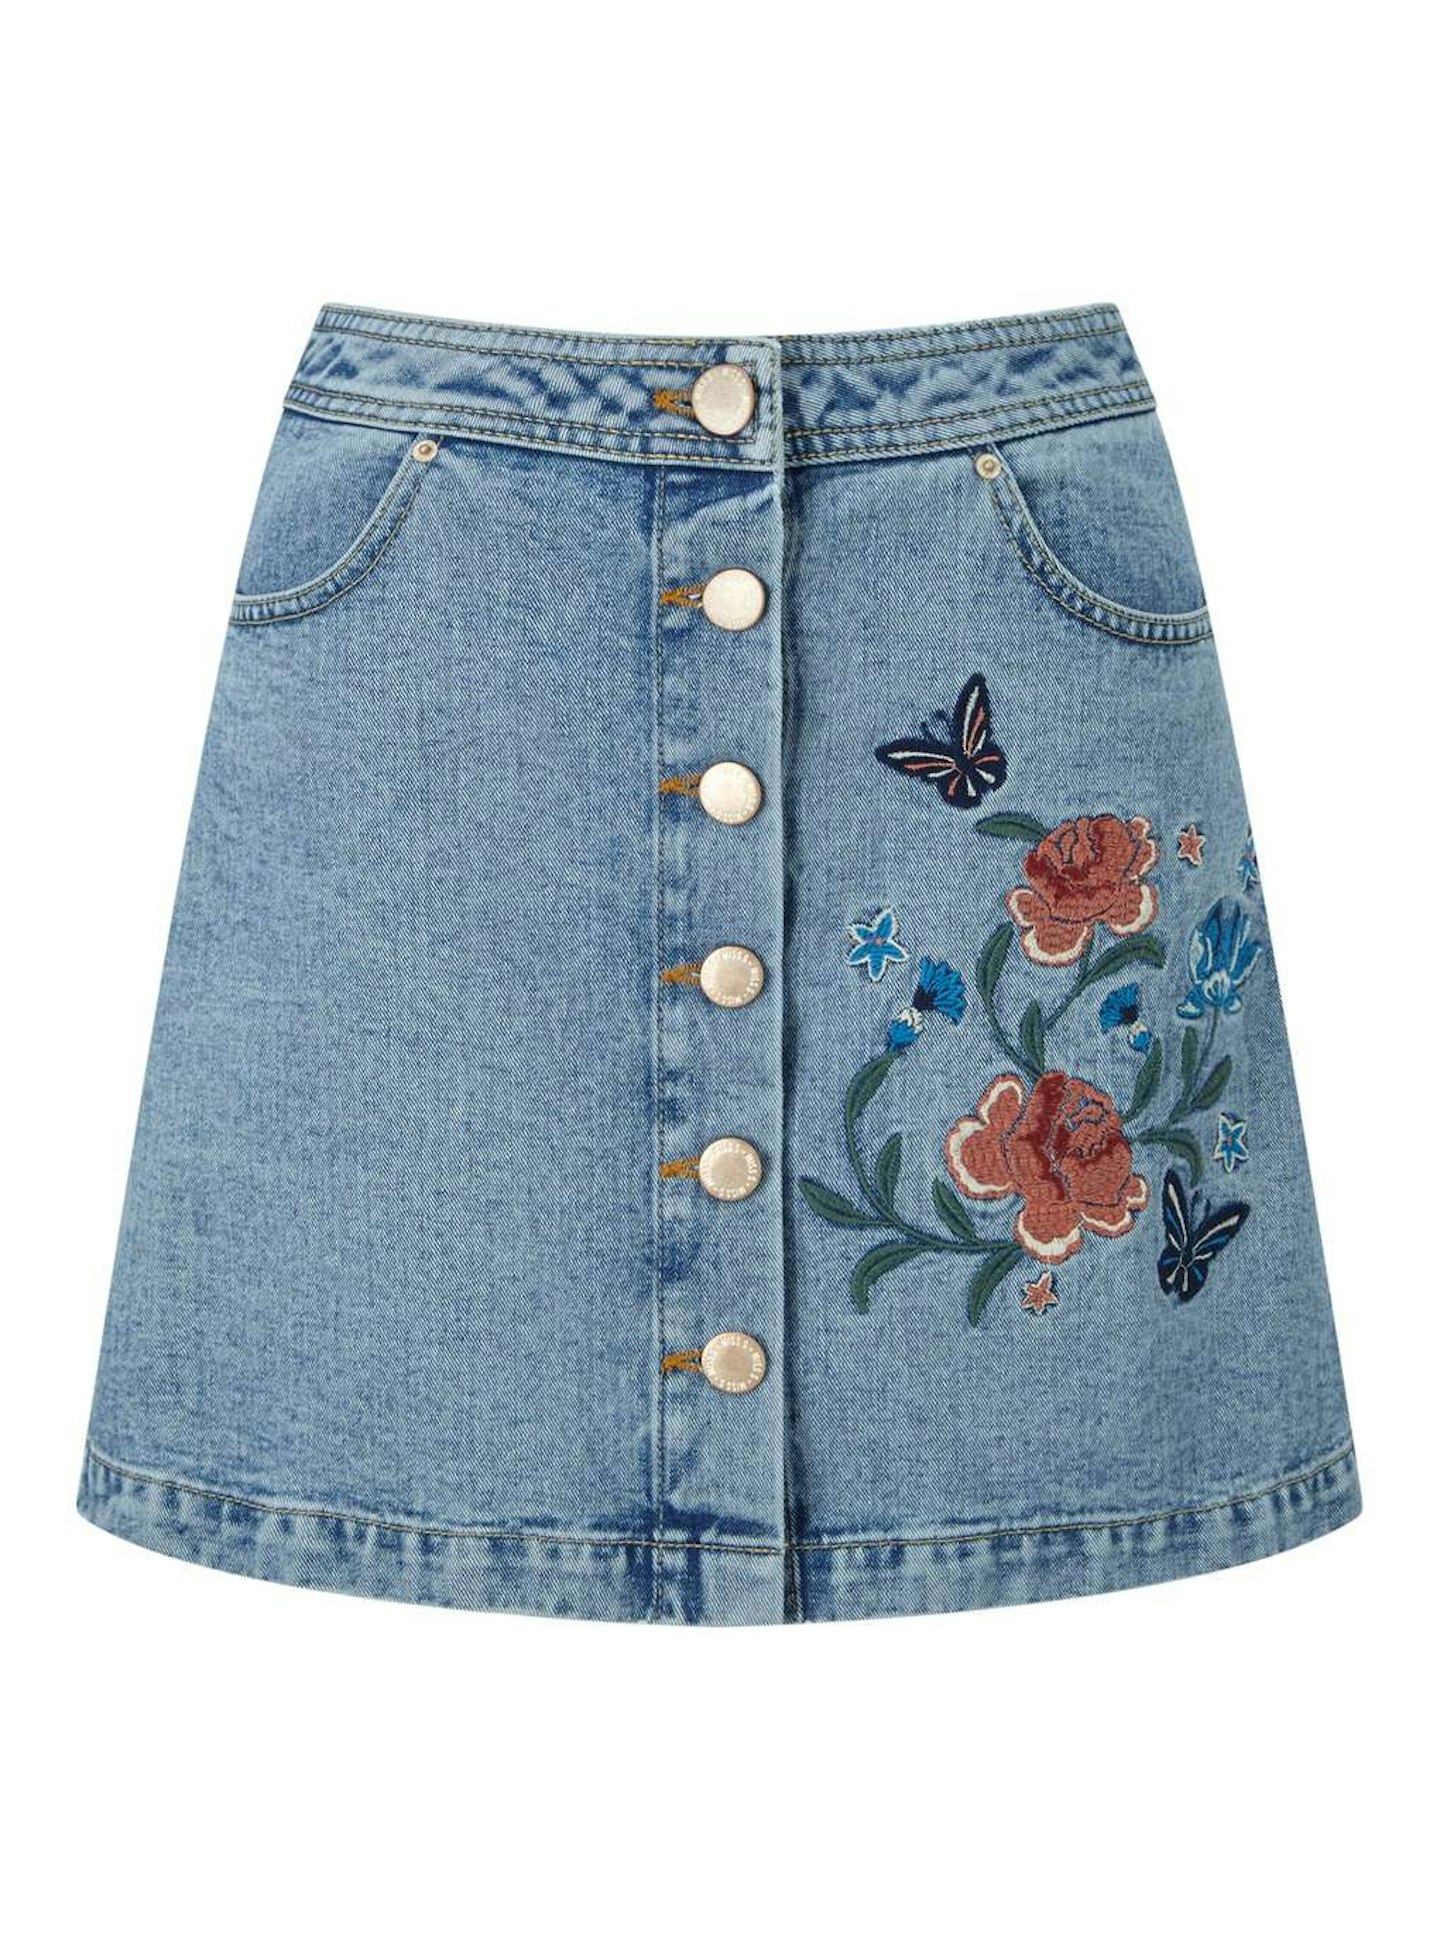 Miss Selfridge Floral Embroidered Denim Skirt £35